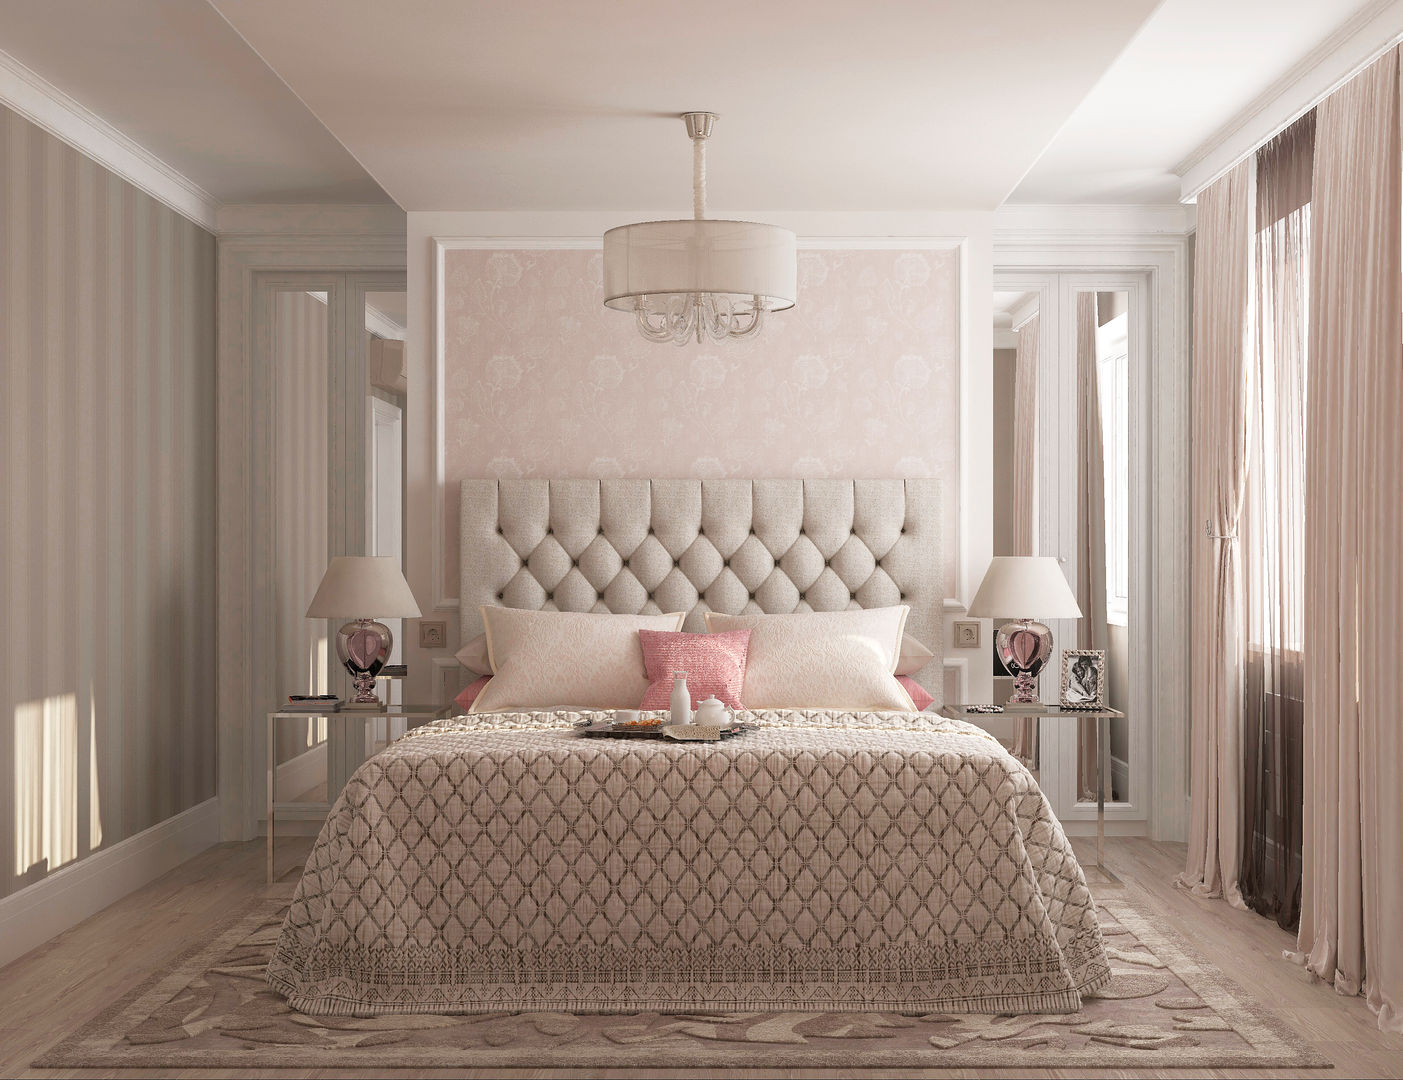 Спальня гостевая "Glamour", Студия дизайна Дарьи Одарюк Студия дизайна Дарьи Одарюк Classic style bedroom